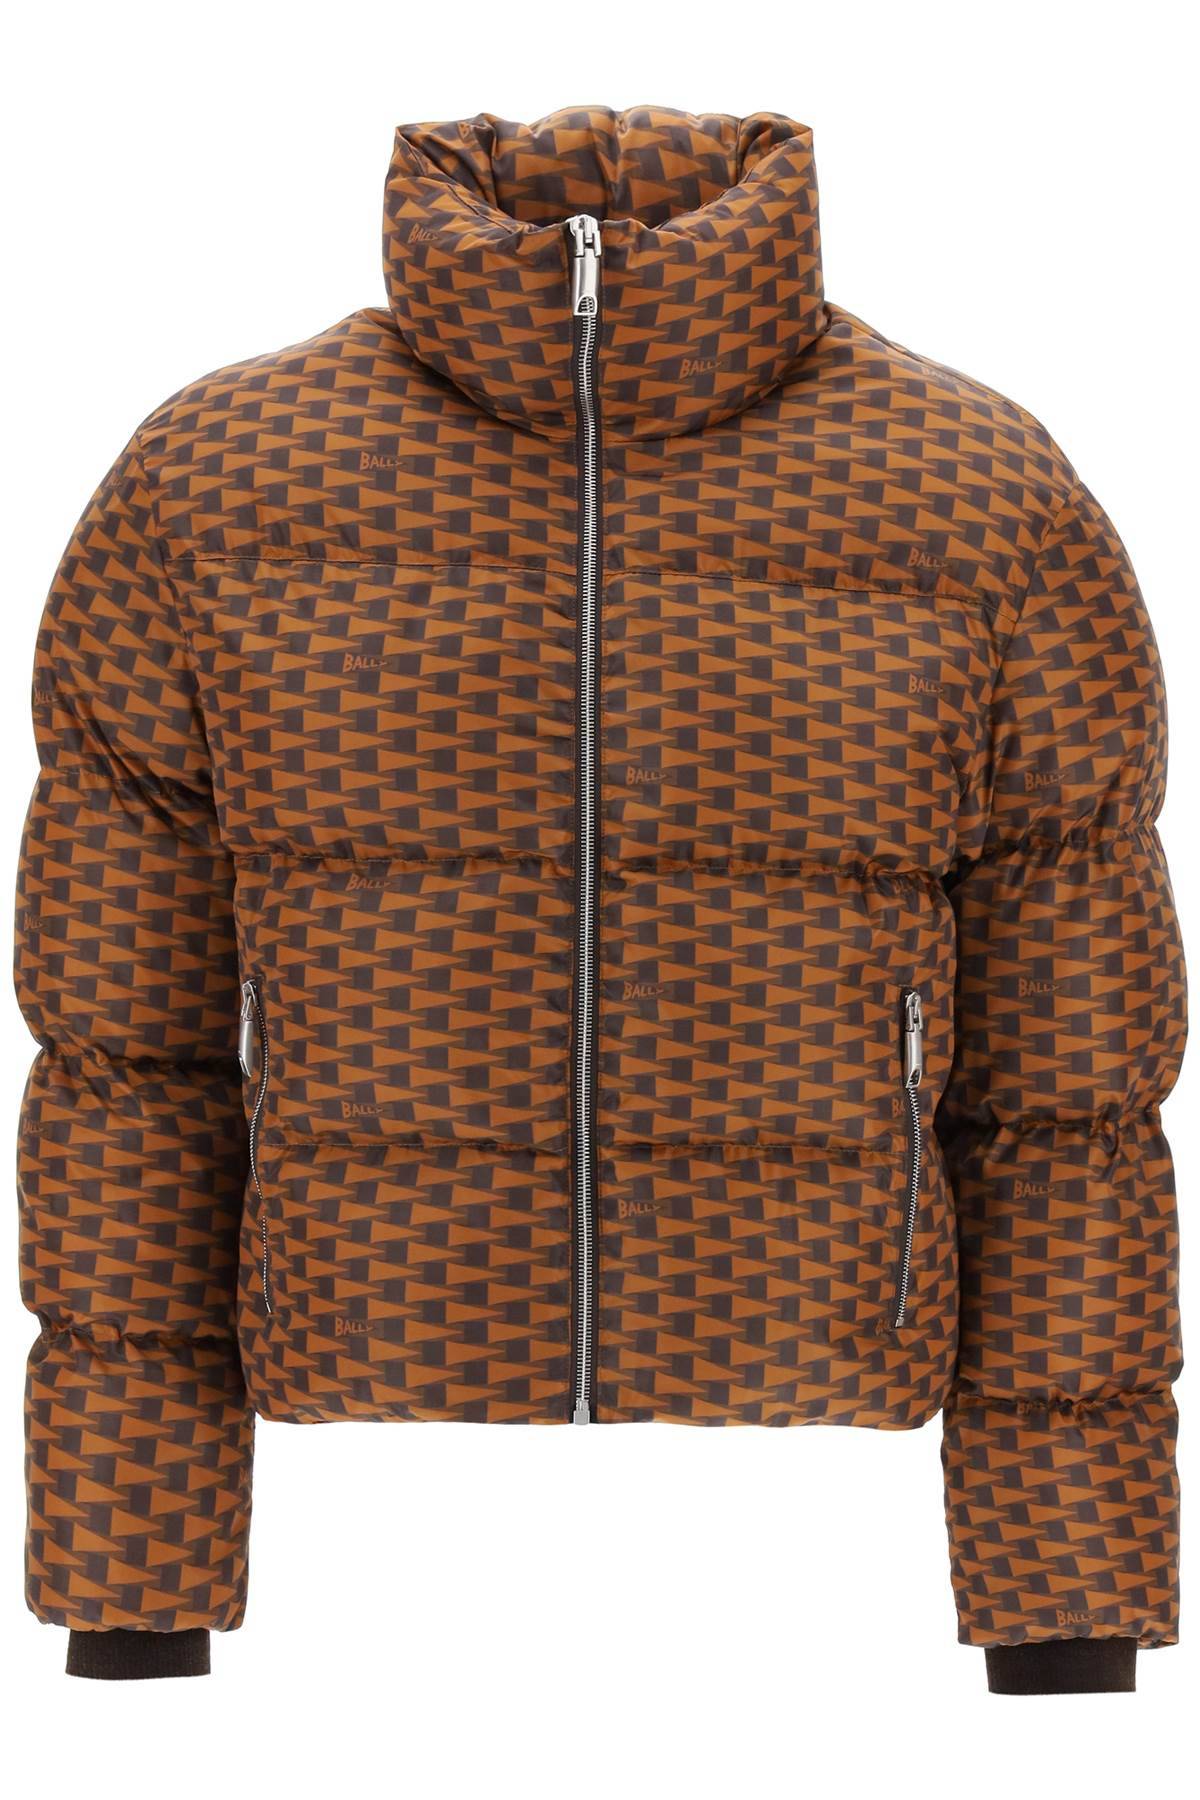 BALLY BALLY short puffer jacket with pennant motif